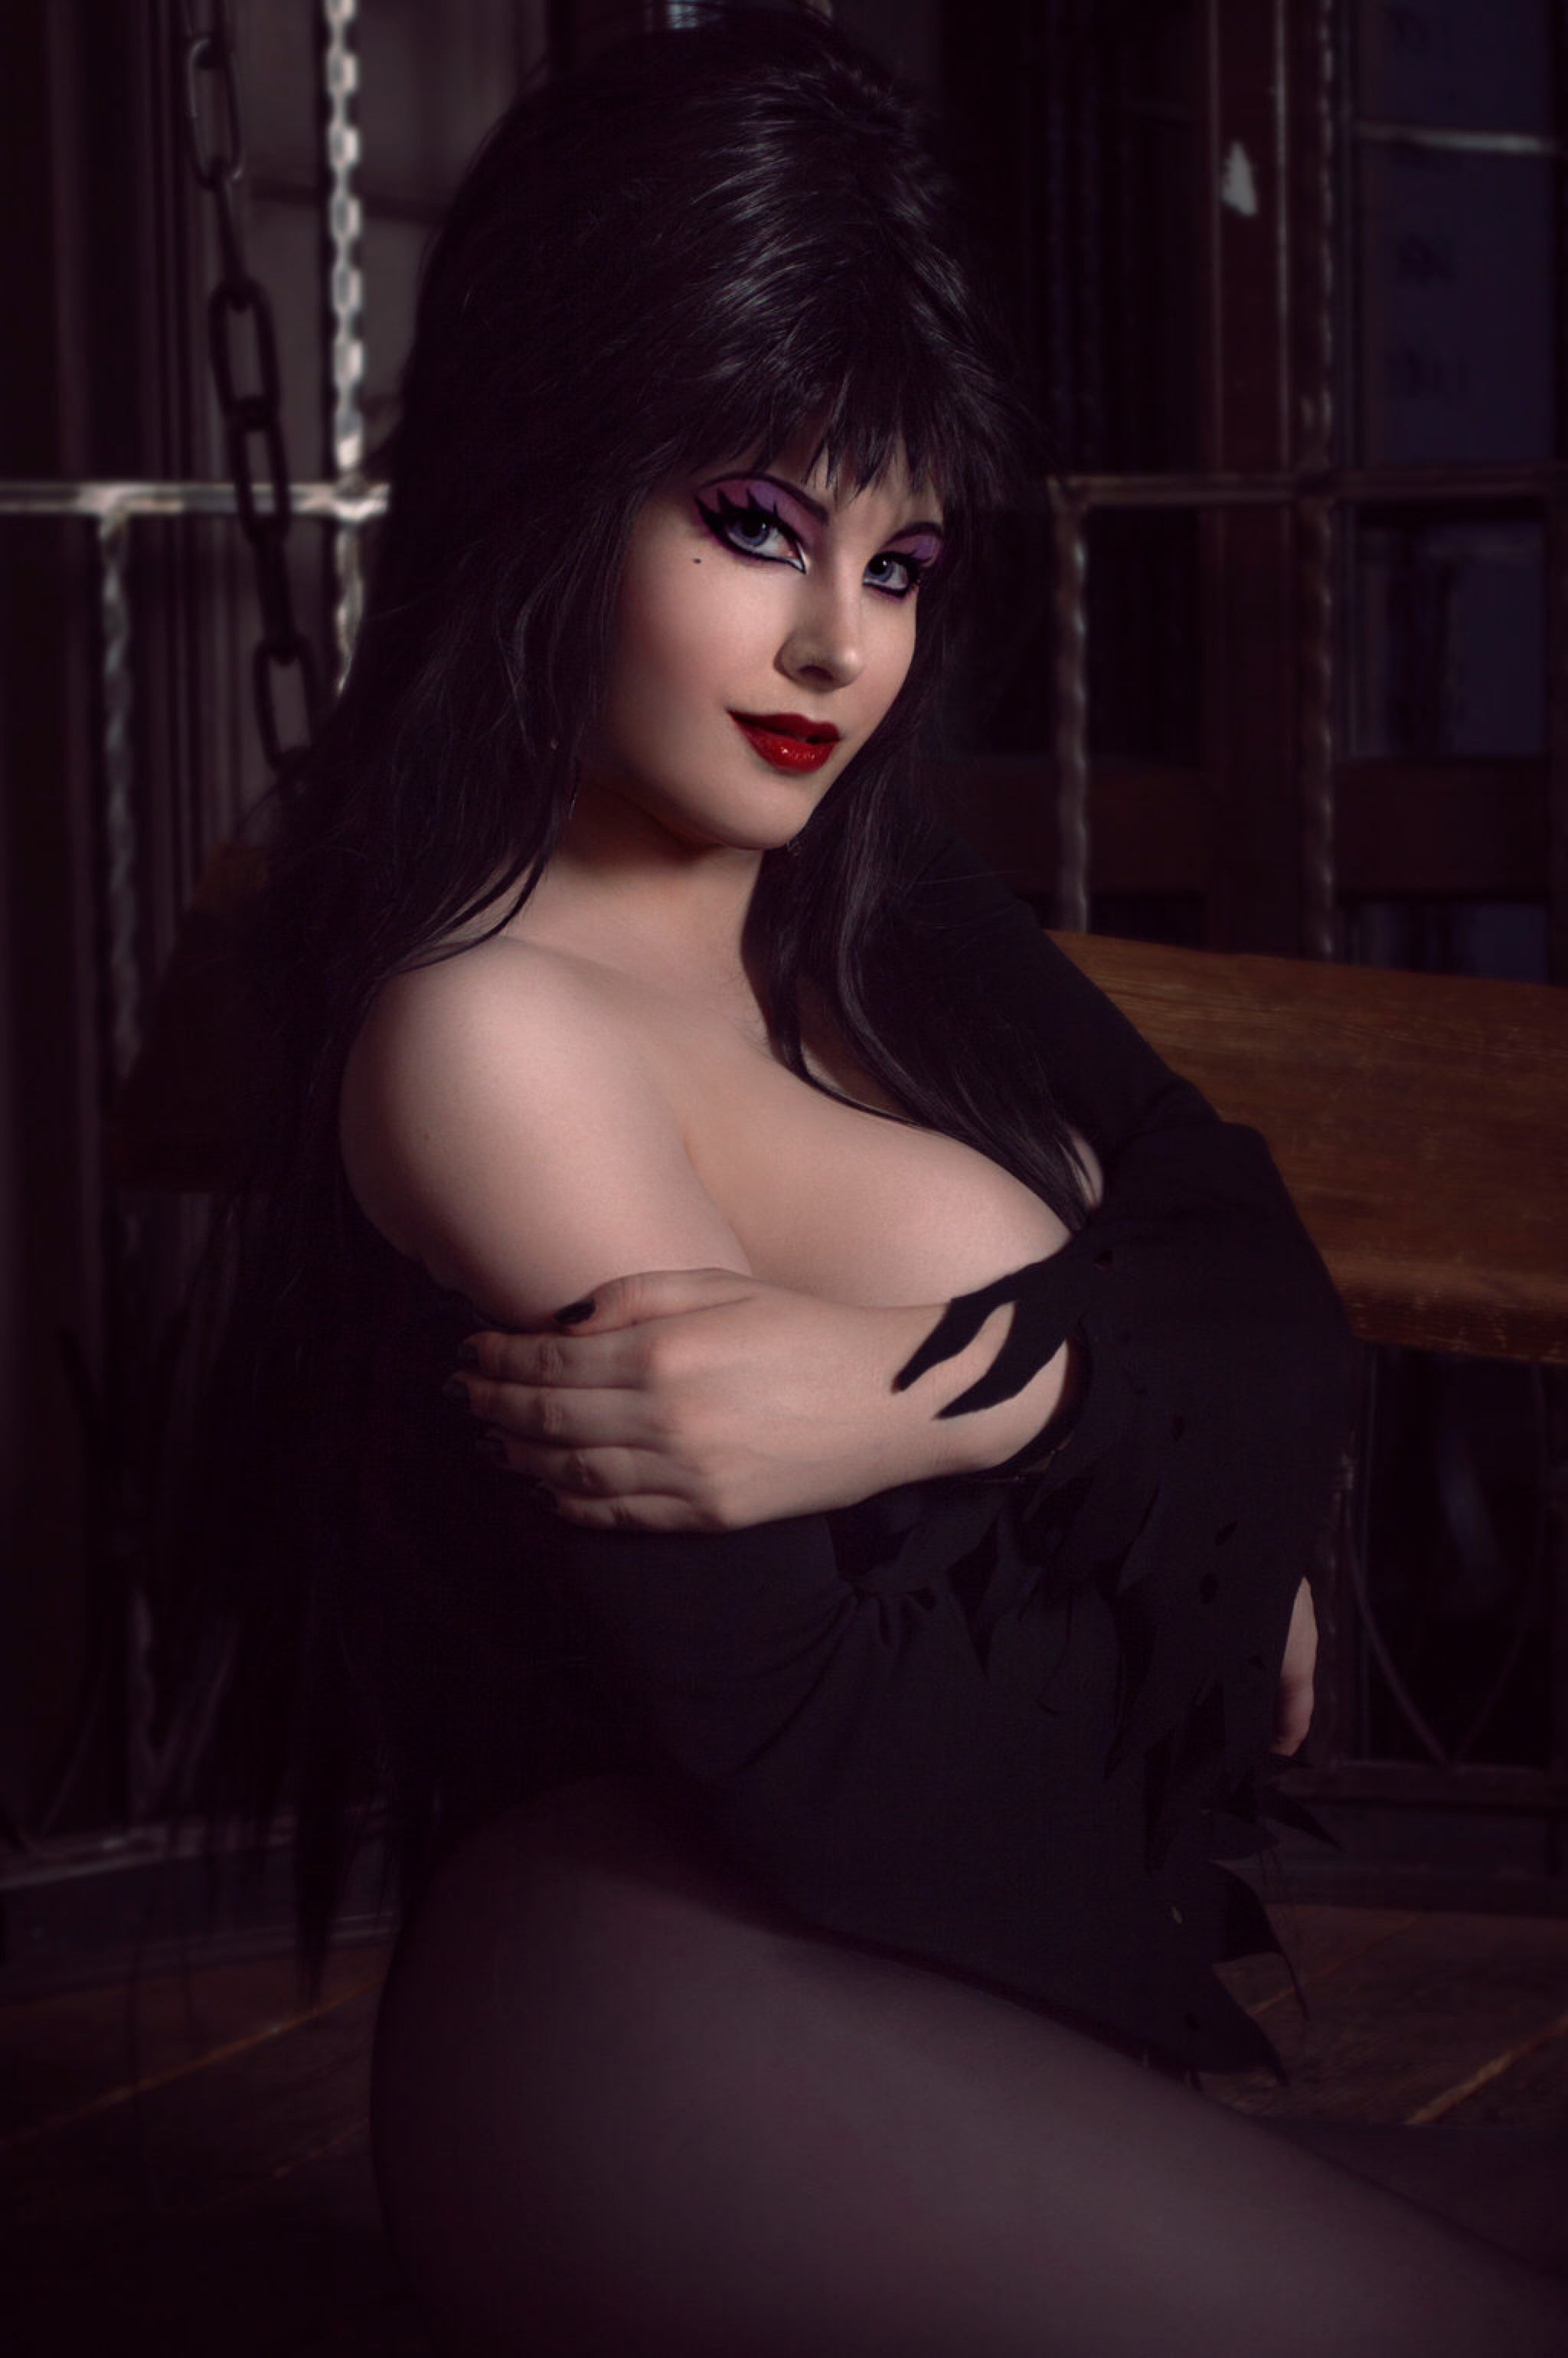 Of the dark elvira nude mistress Cassandra Peterson